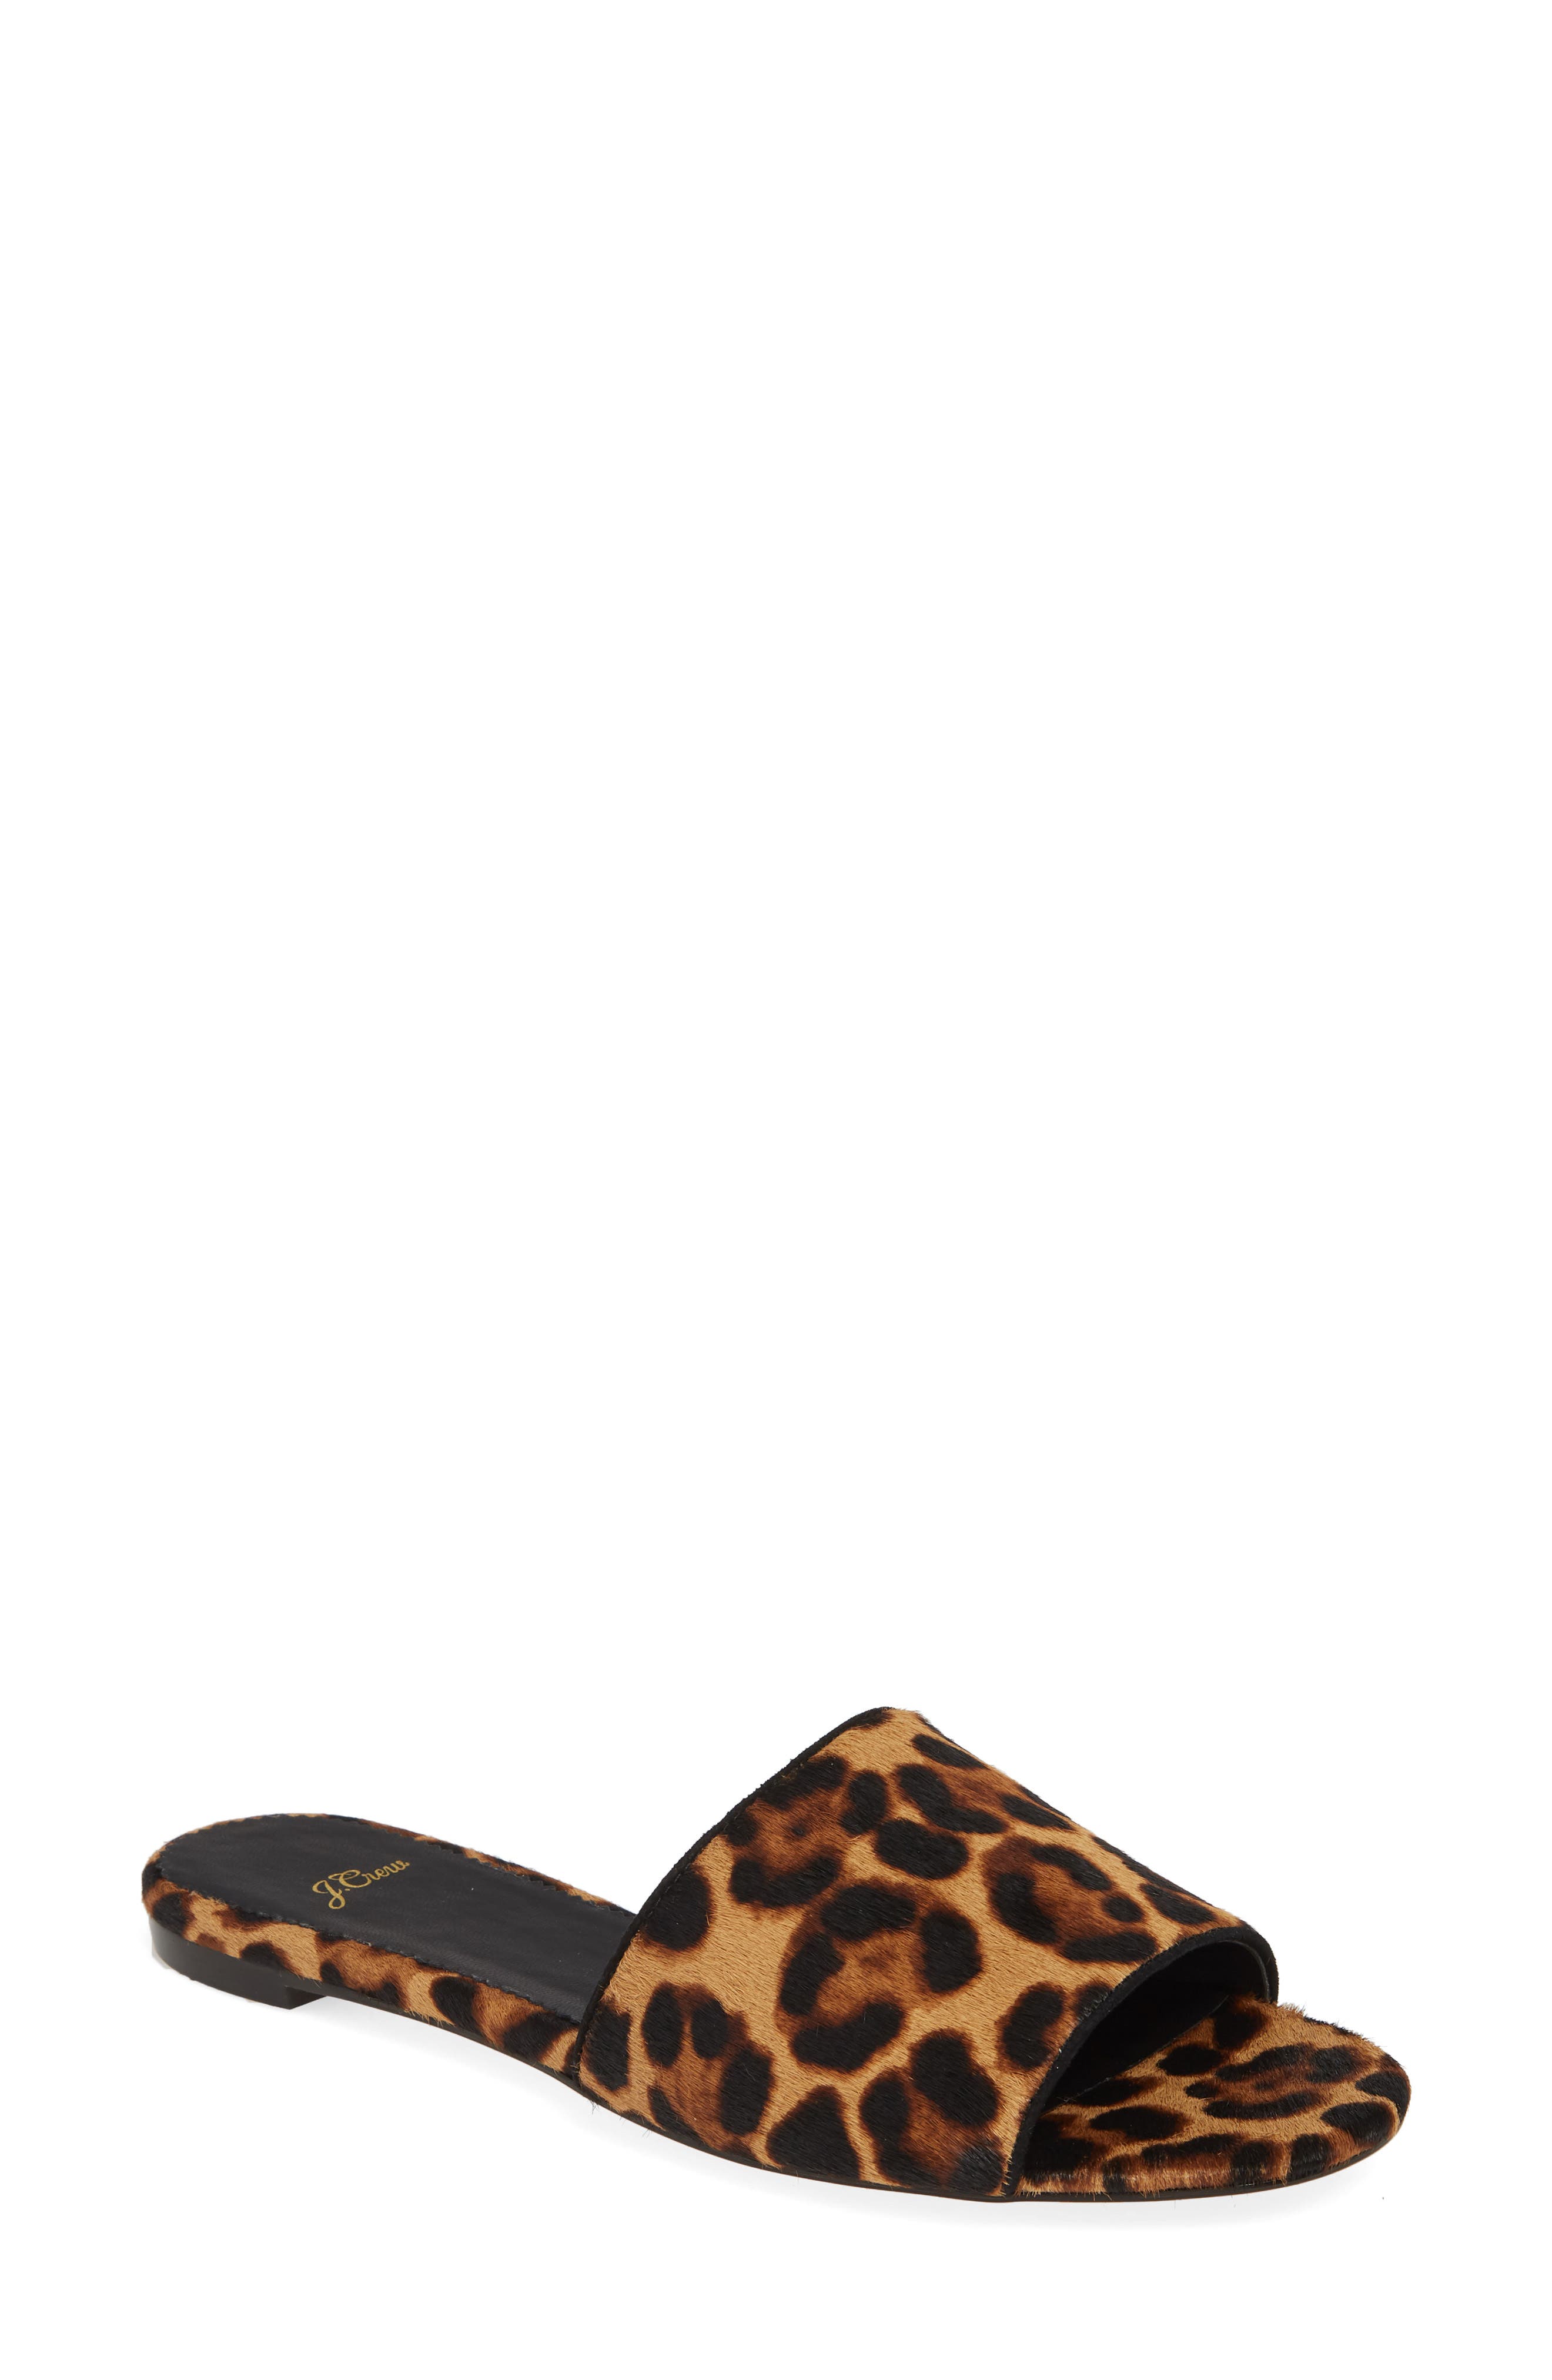 leopard slide sandal